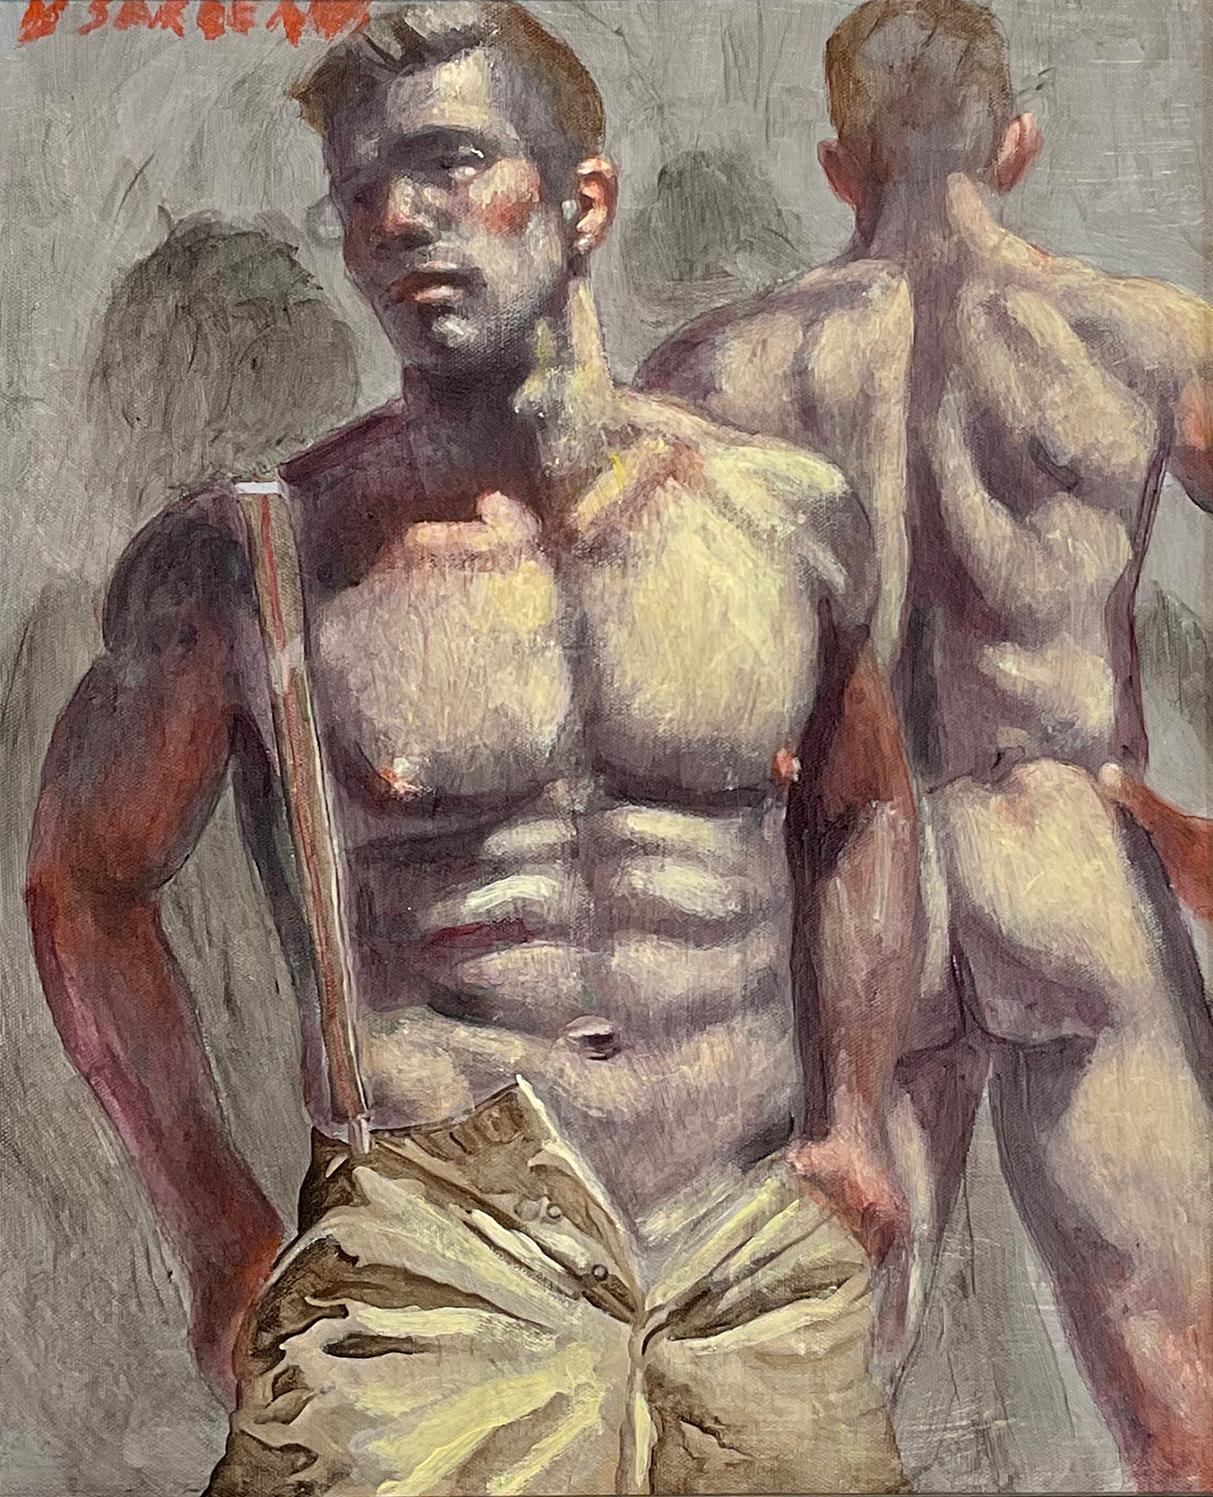 Charlie in Suspenders (Figurative Painting & Nude Study by Mark Beard)  2